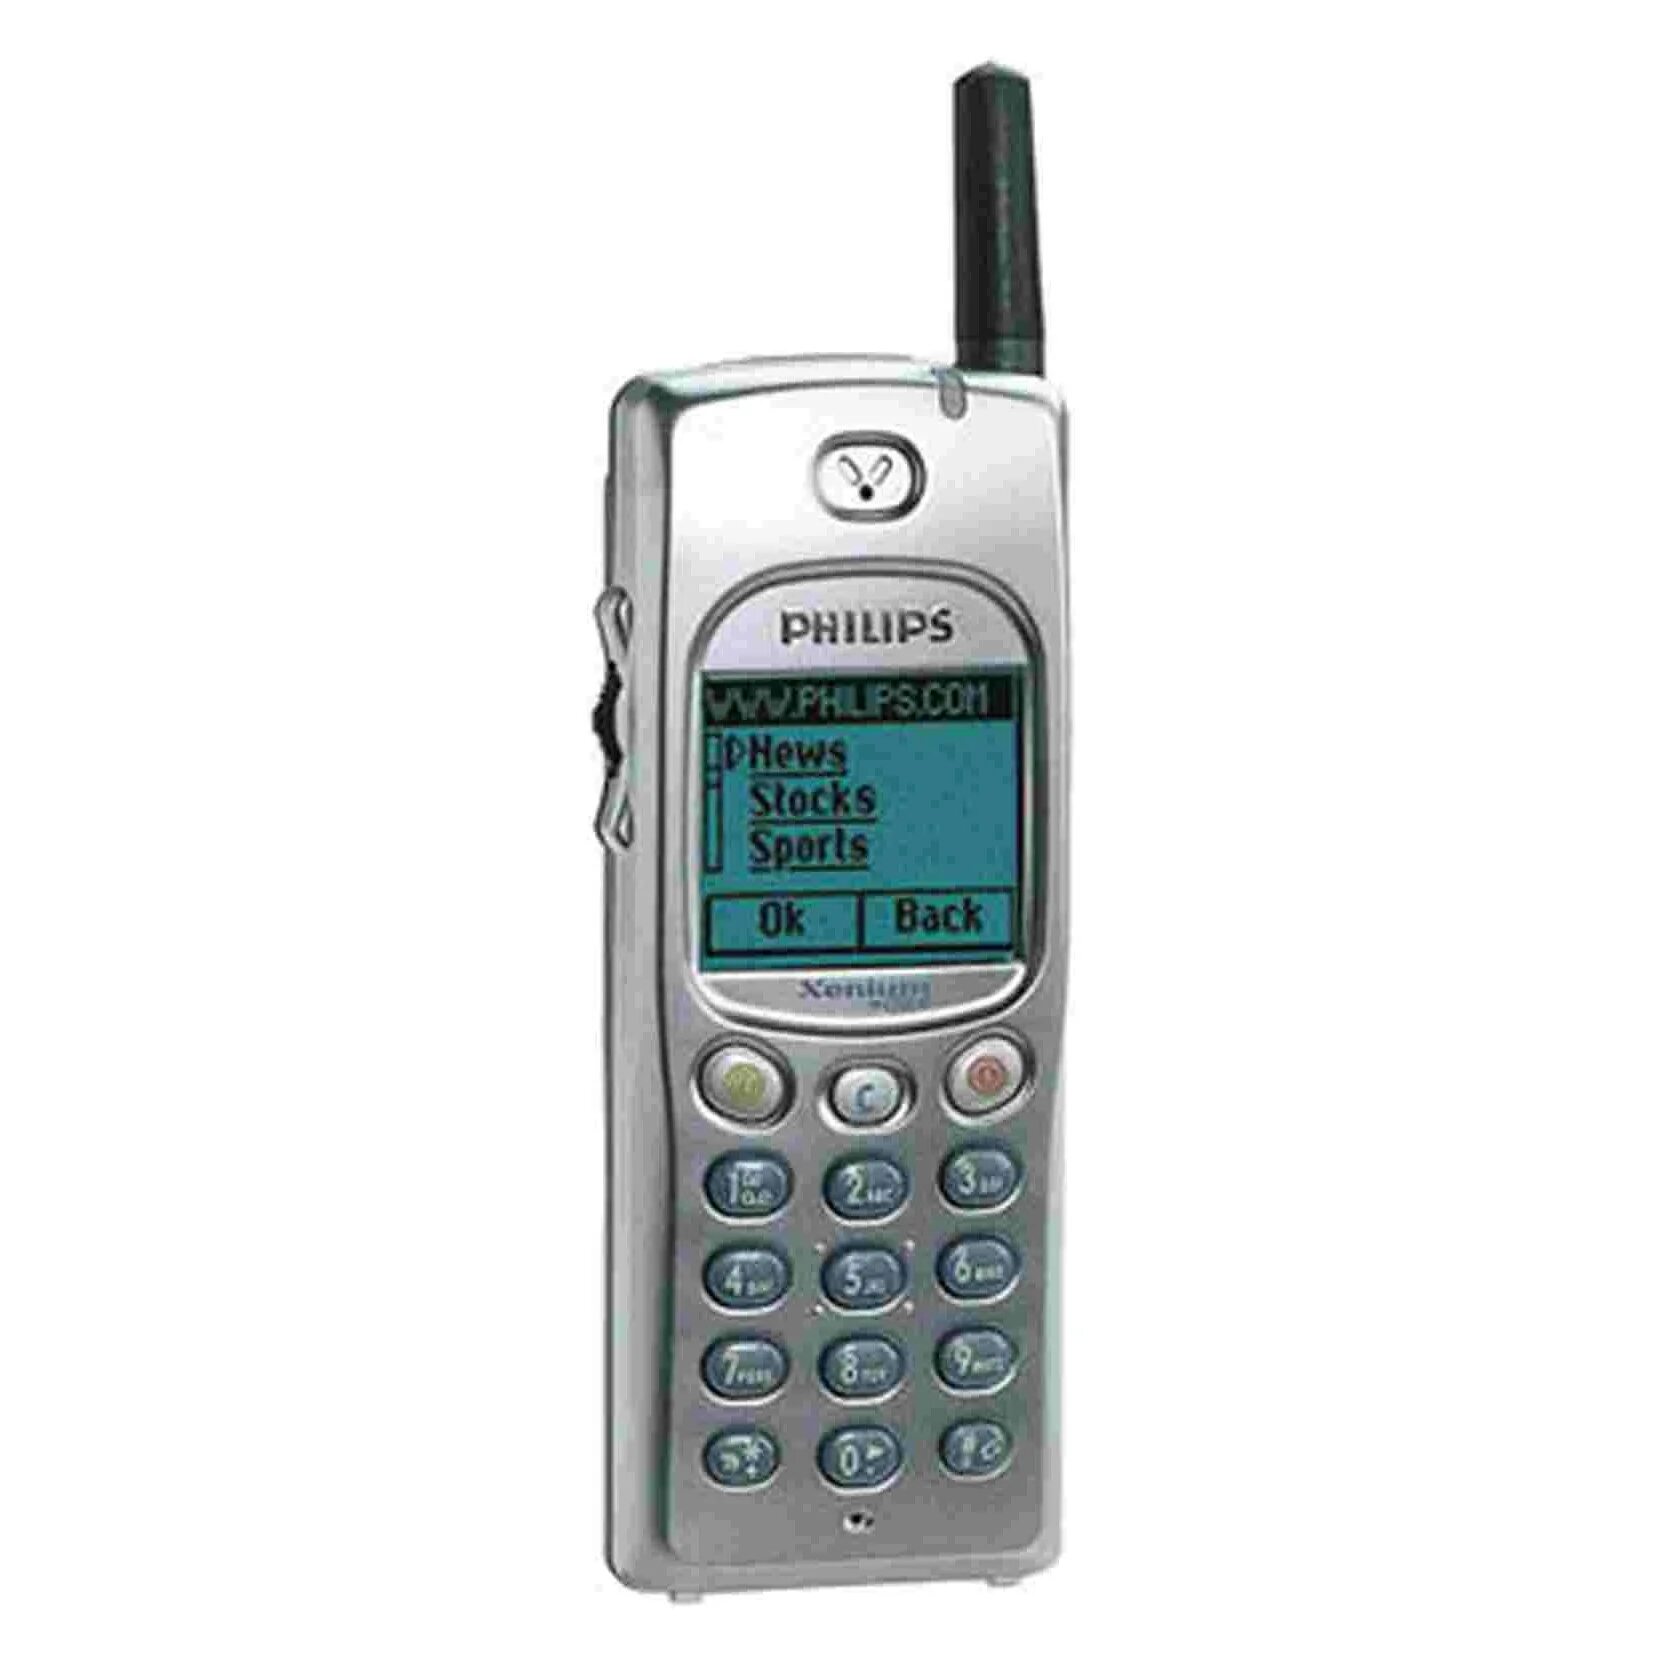 Philips Xenium 9@9. Philips Xenium 9@9 2003. Philips Xenium 9@9 2000 года. Philips Xenium 9@9u. Филипс старый телефон